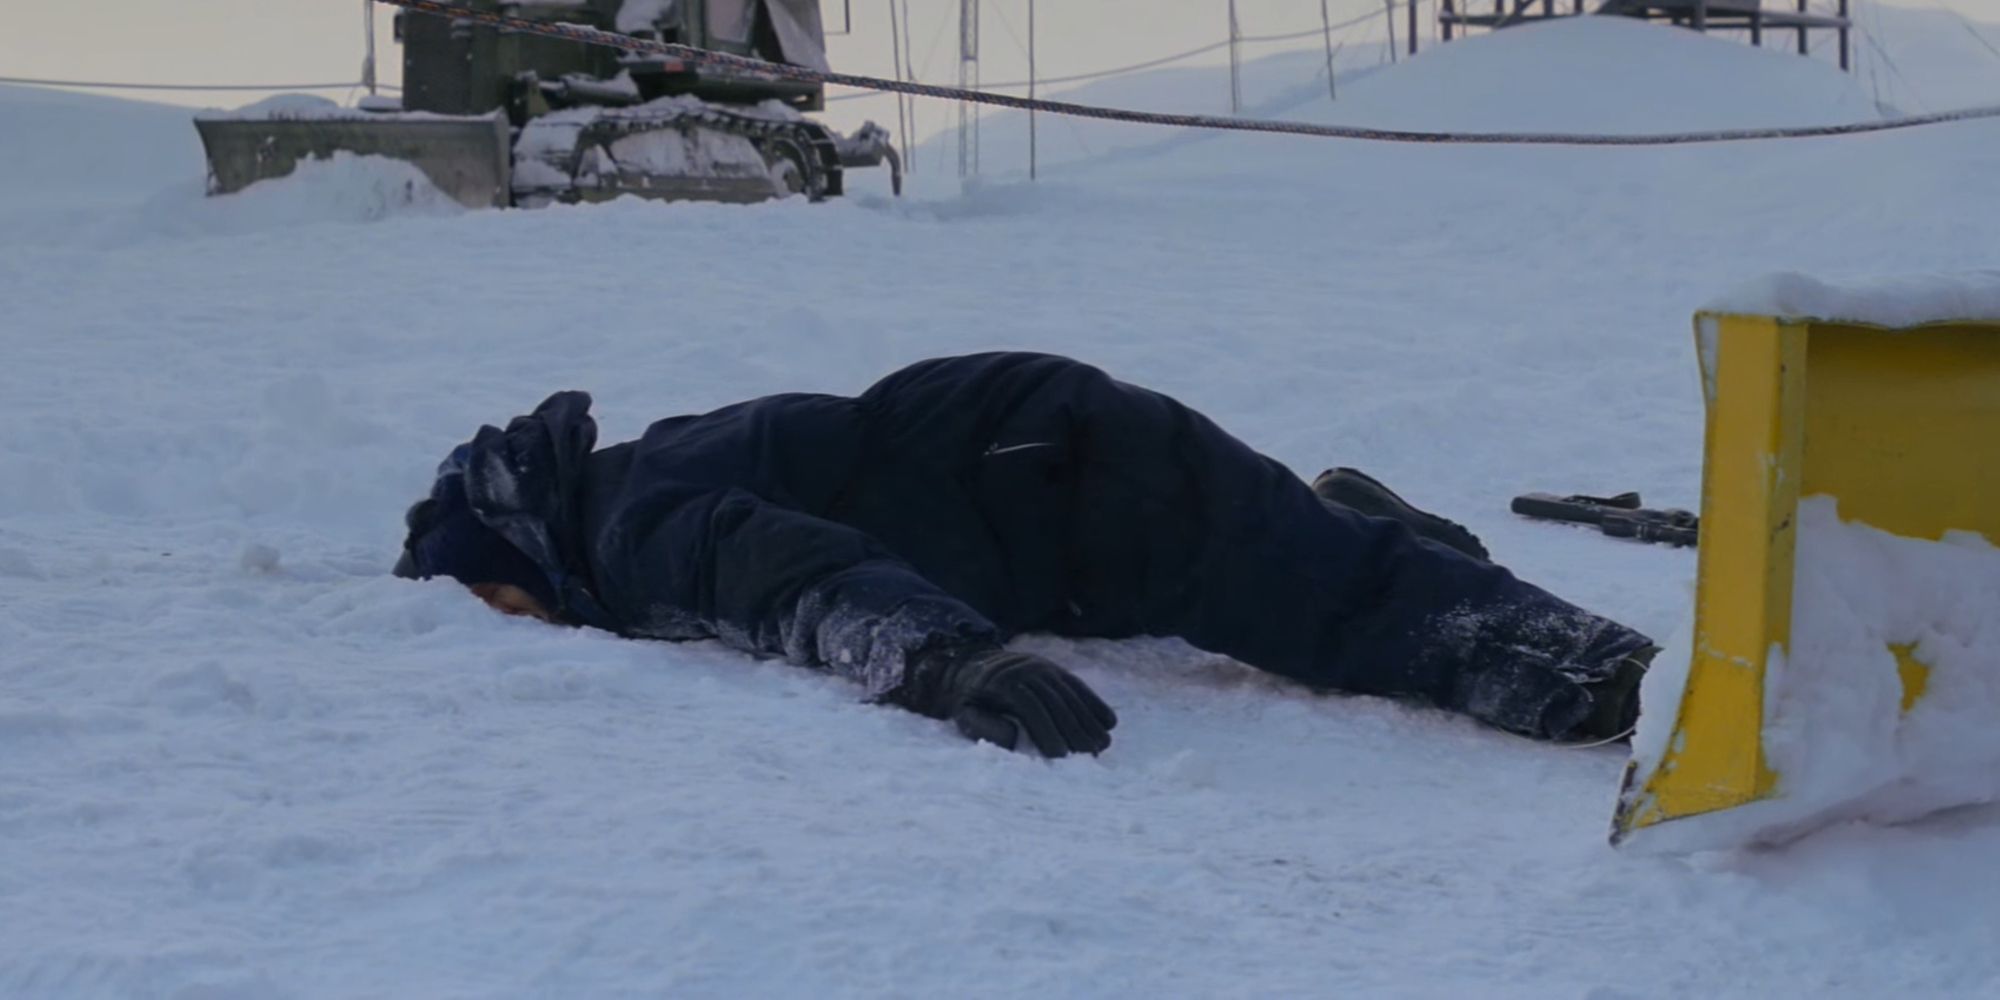 Lars lying dead in the snow in John Carpenter's The Thing